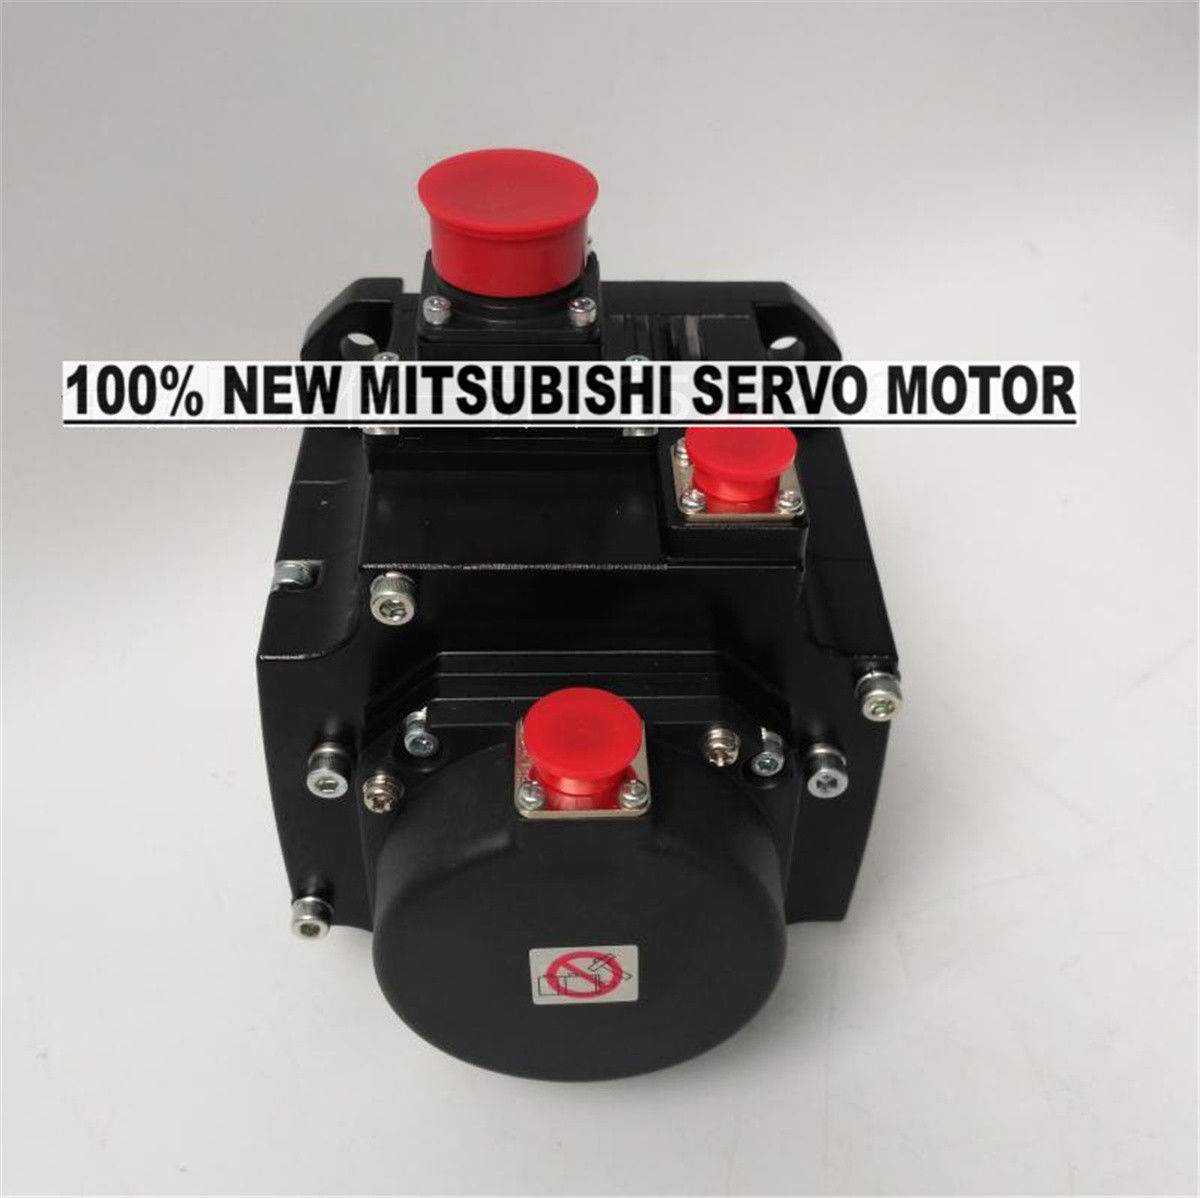 NEW Mitsubishi Servo Motor HG-SR52BJ in box HGSR52BJ - Click Image to Close